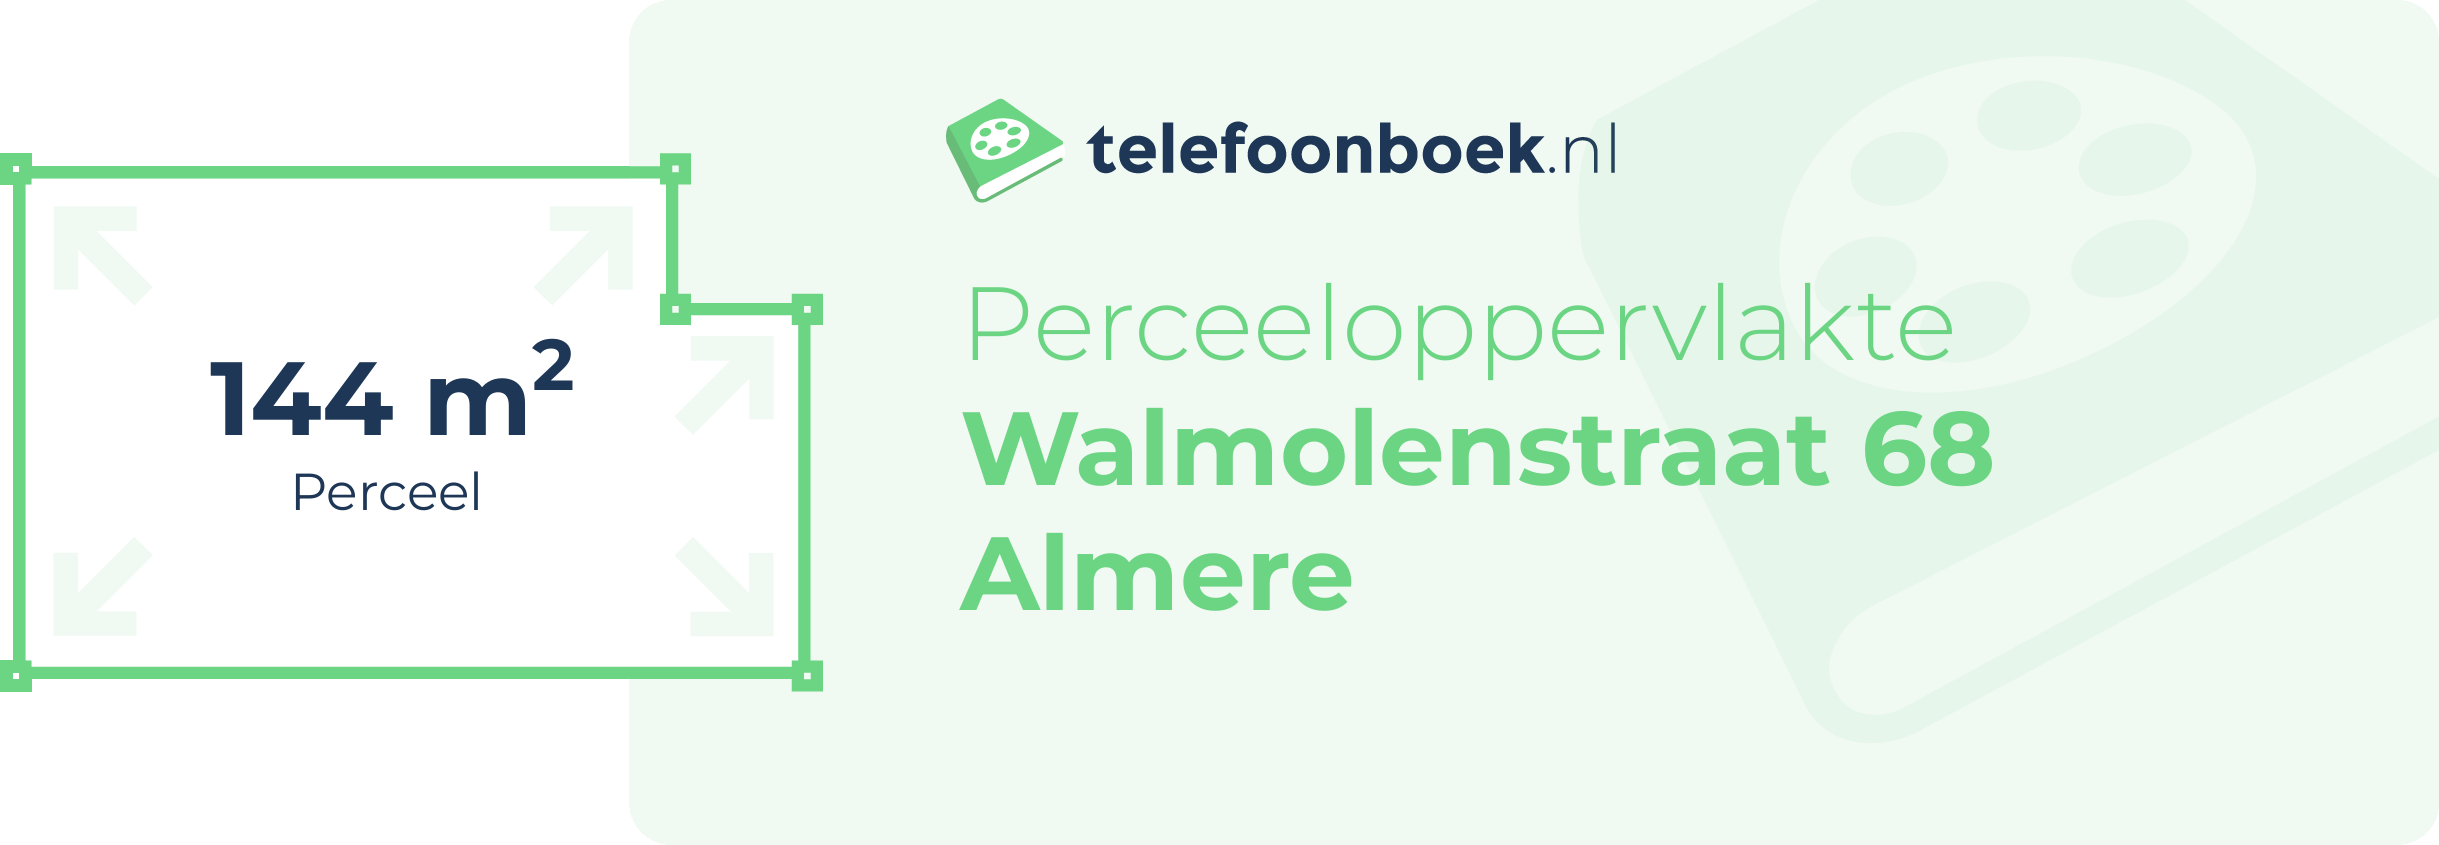 Perceeloppervlakte Walmolenstraat 68 Almere